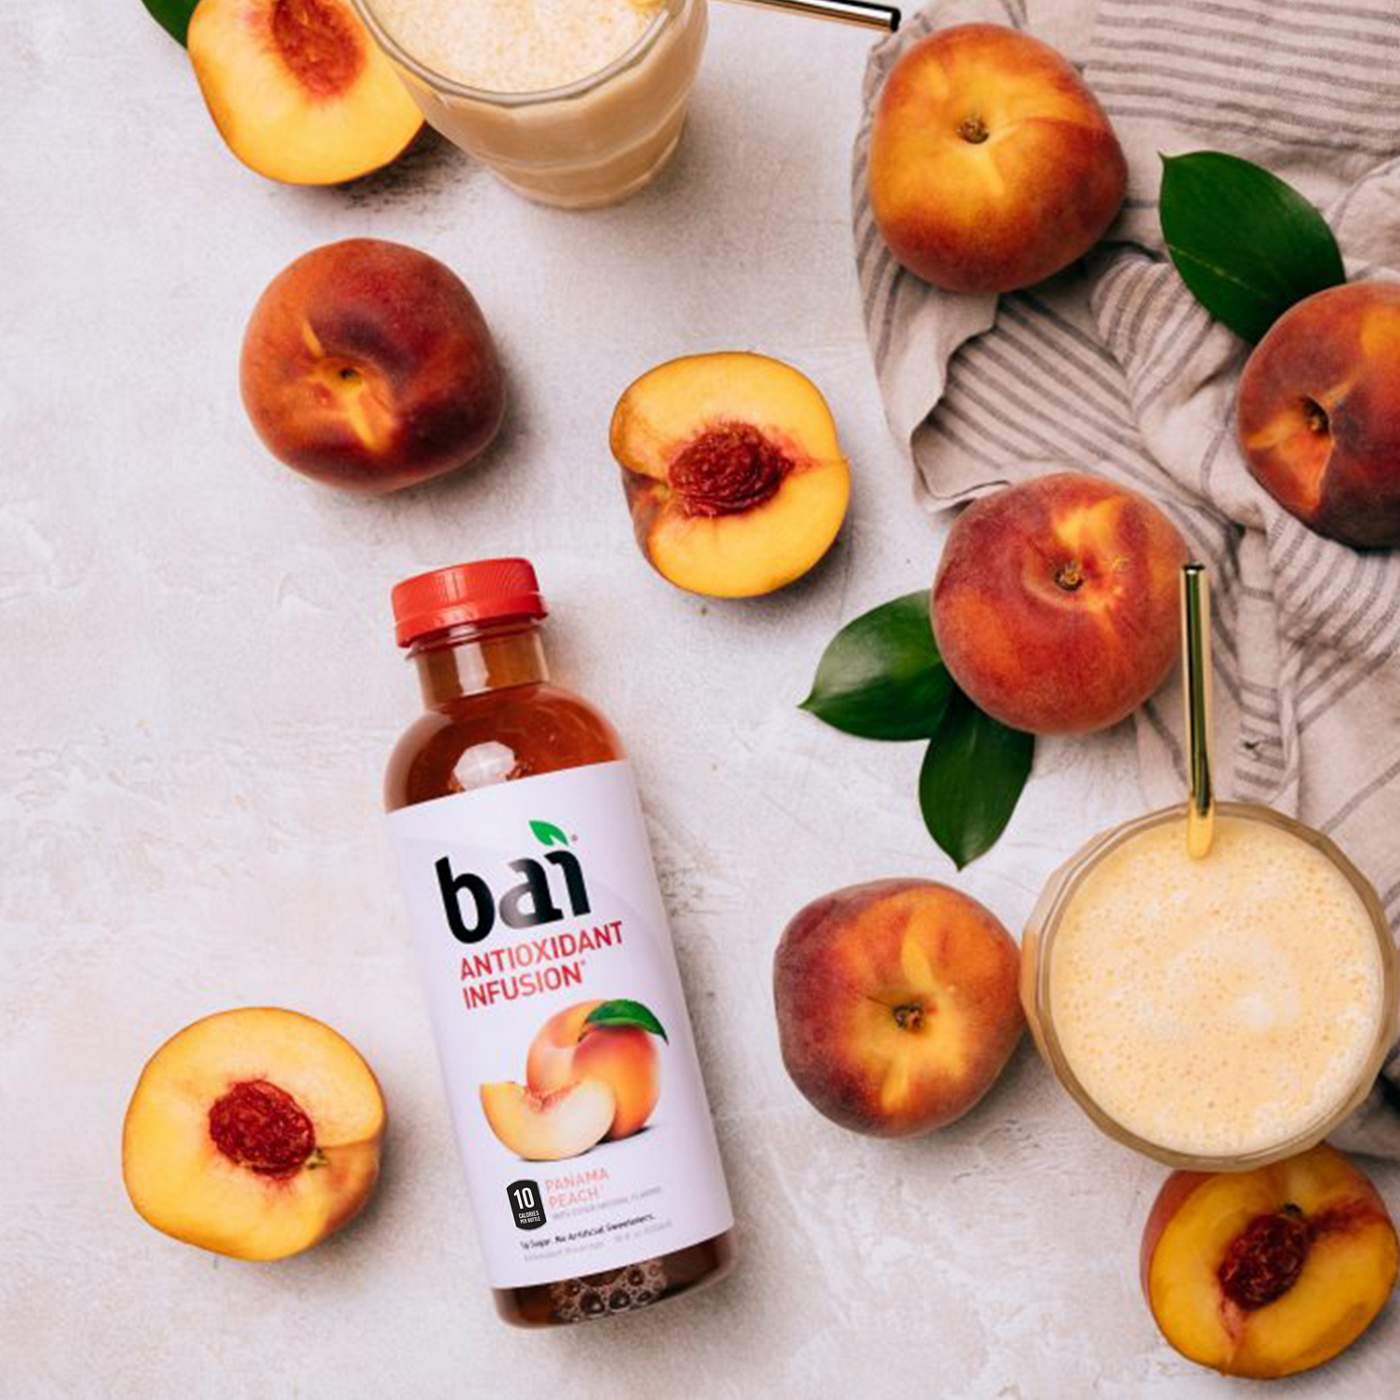 Bai 5 Antioxidant Infusions Panama Peach Beverage; image 4 of 4